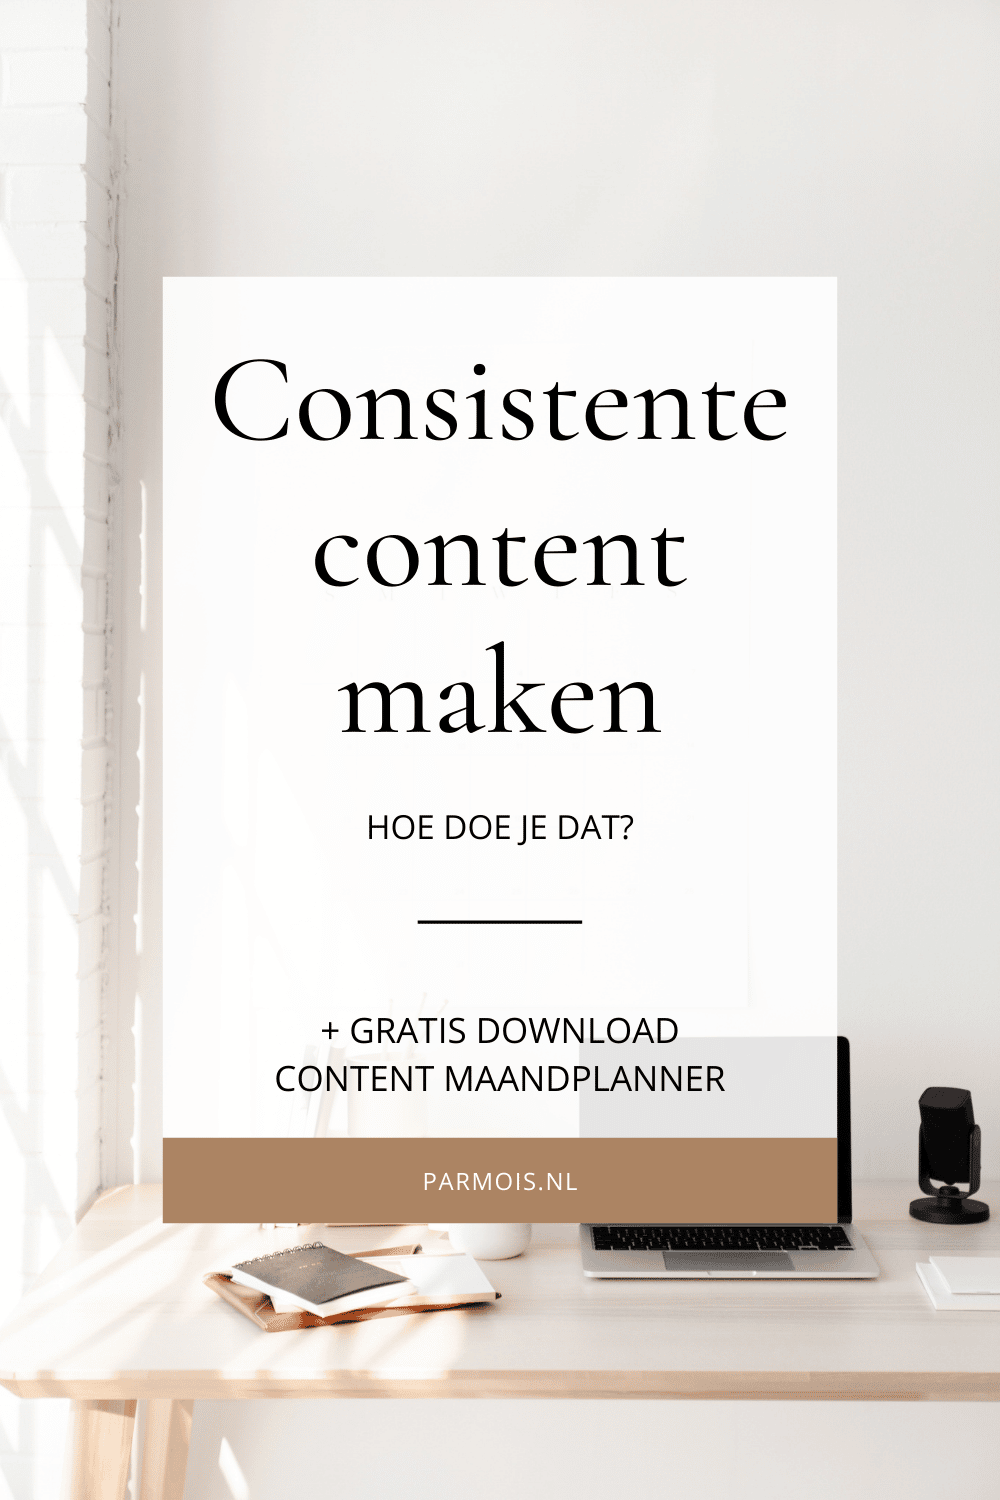 Hoe maak je consistente content?